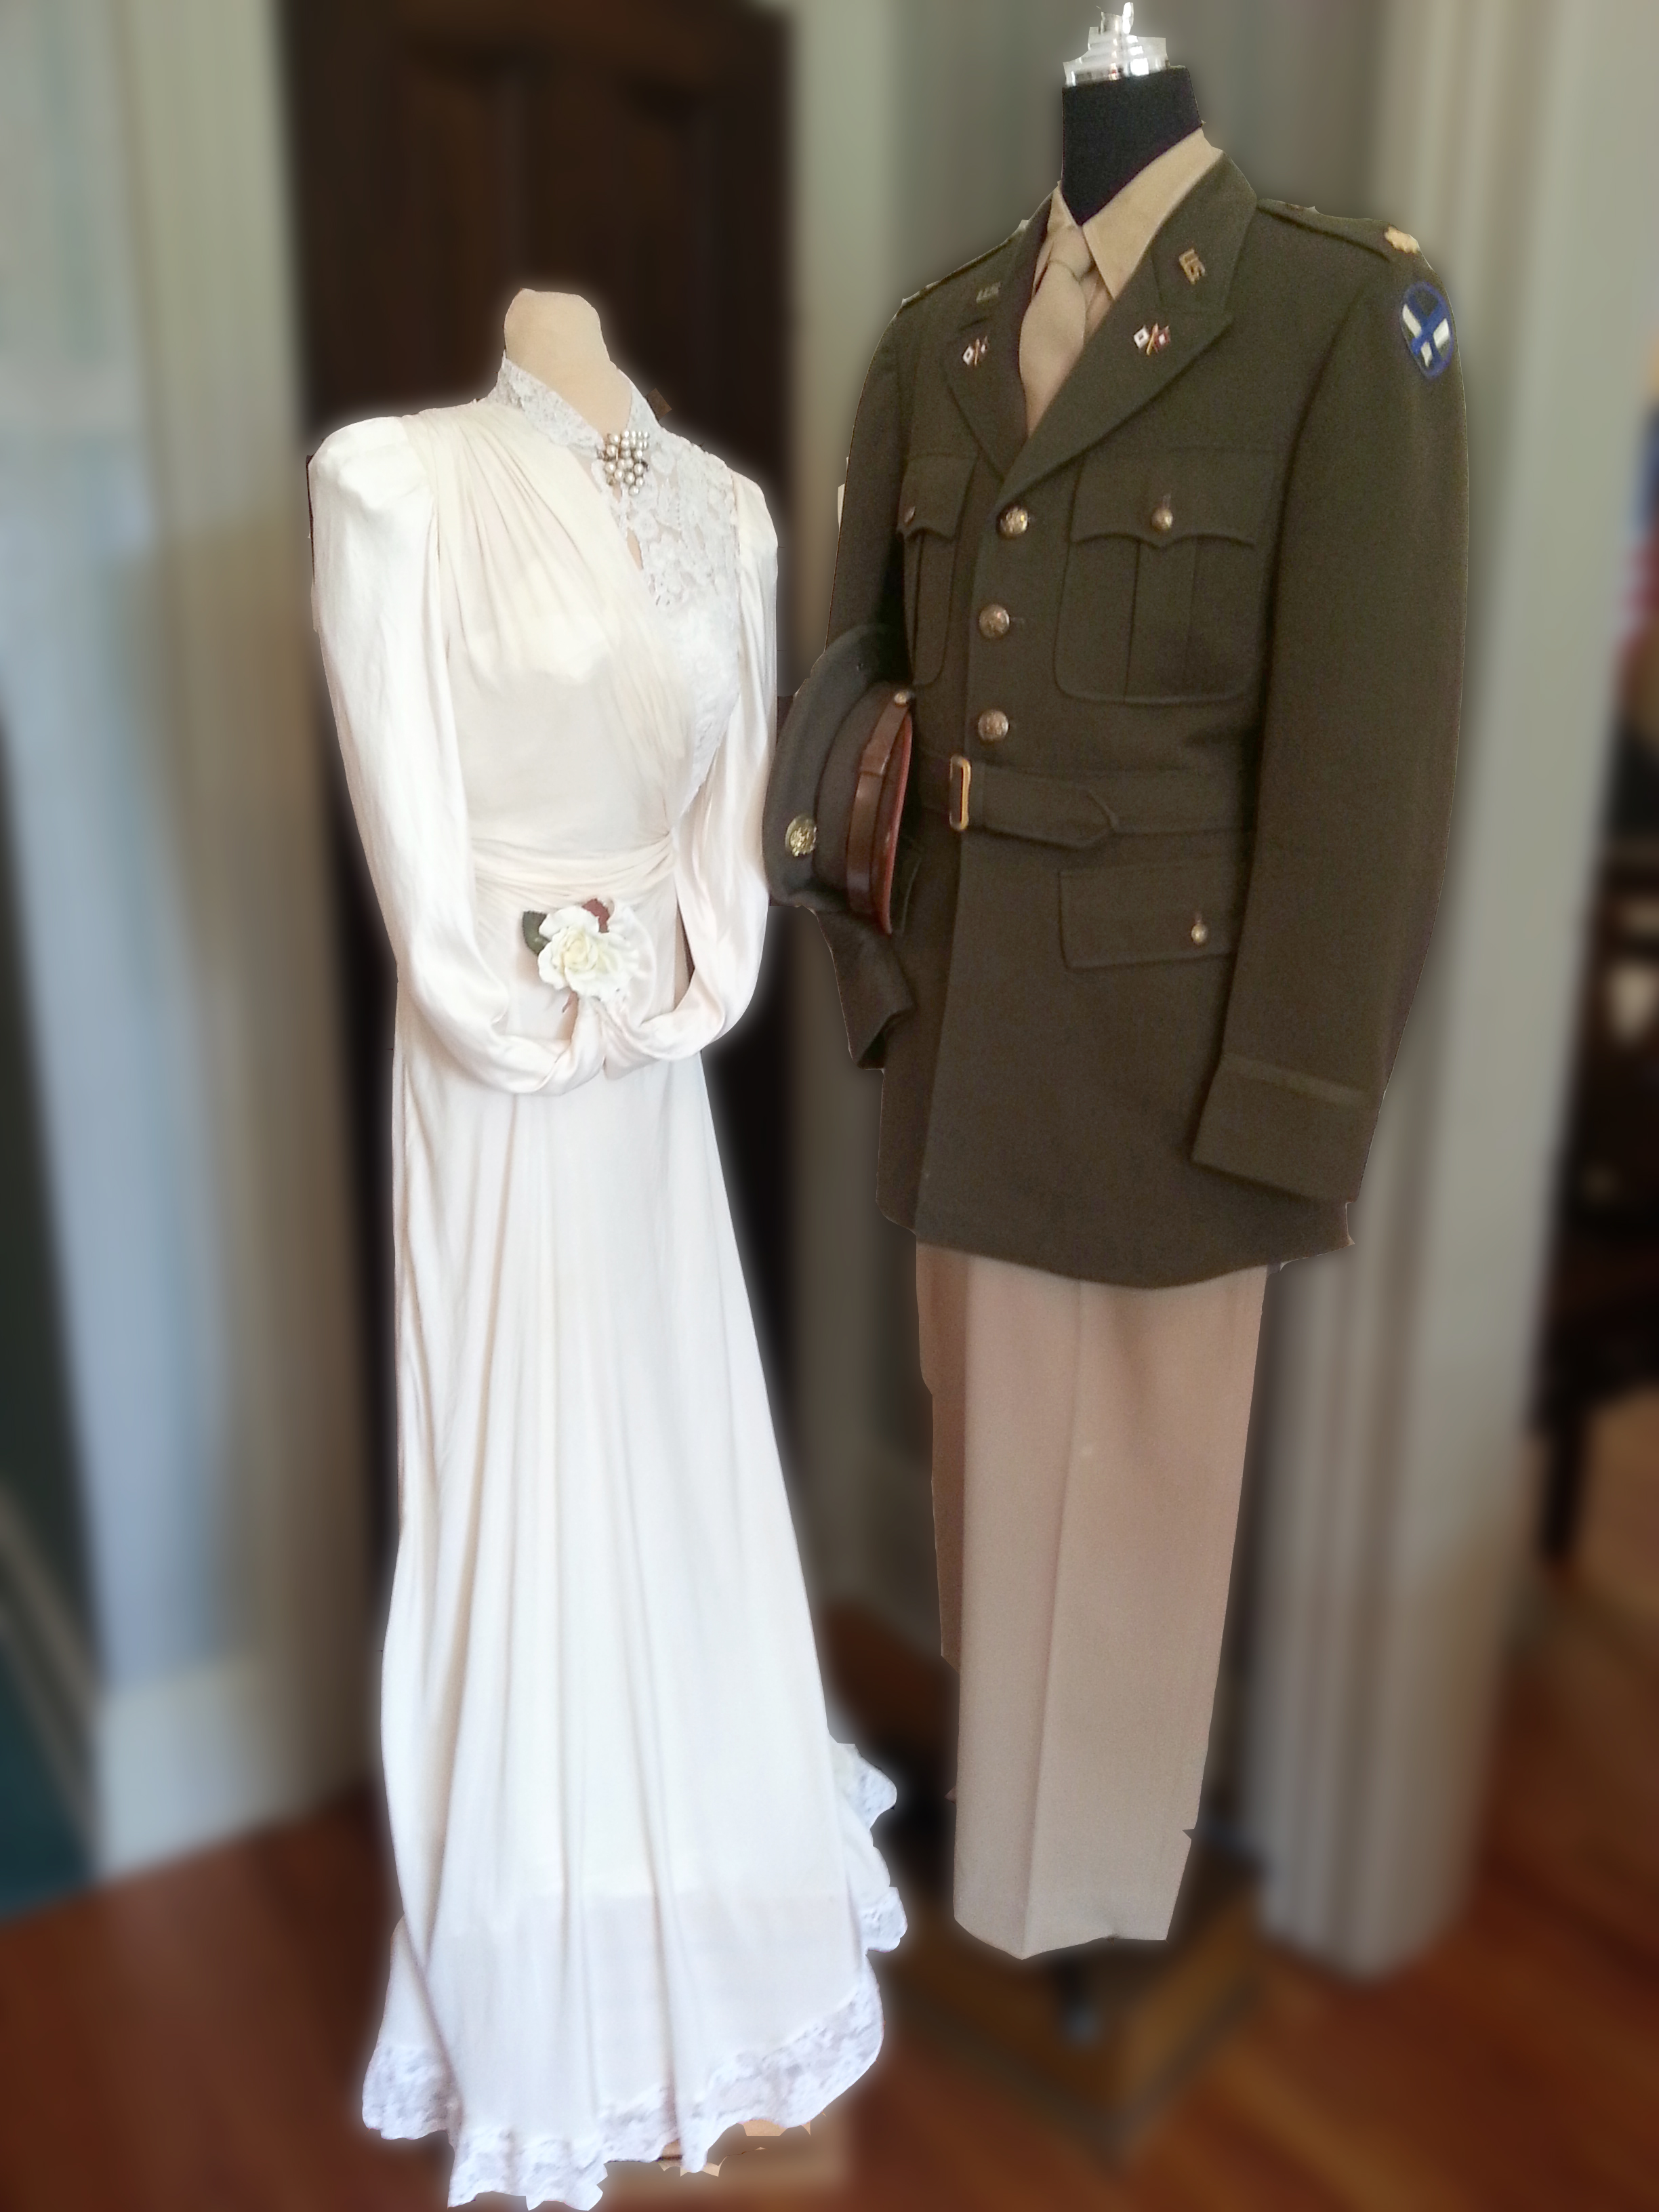 Frank Orr's military uniform & Zoe Orr's wedding dress